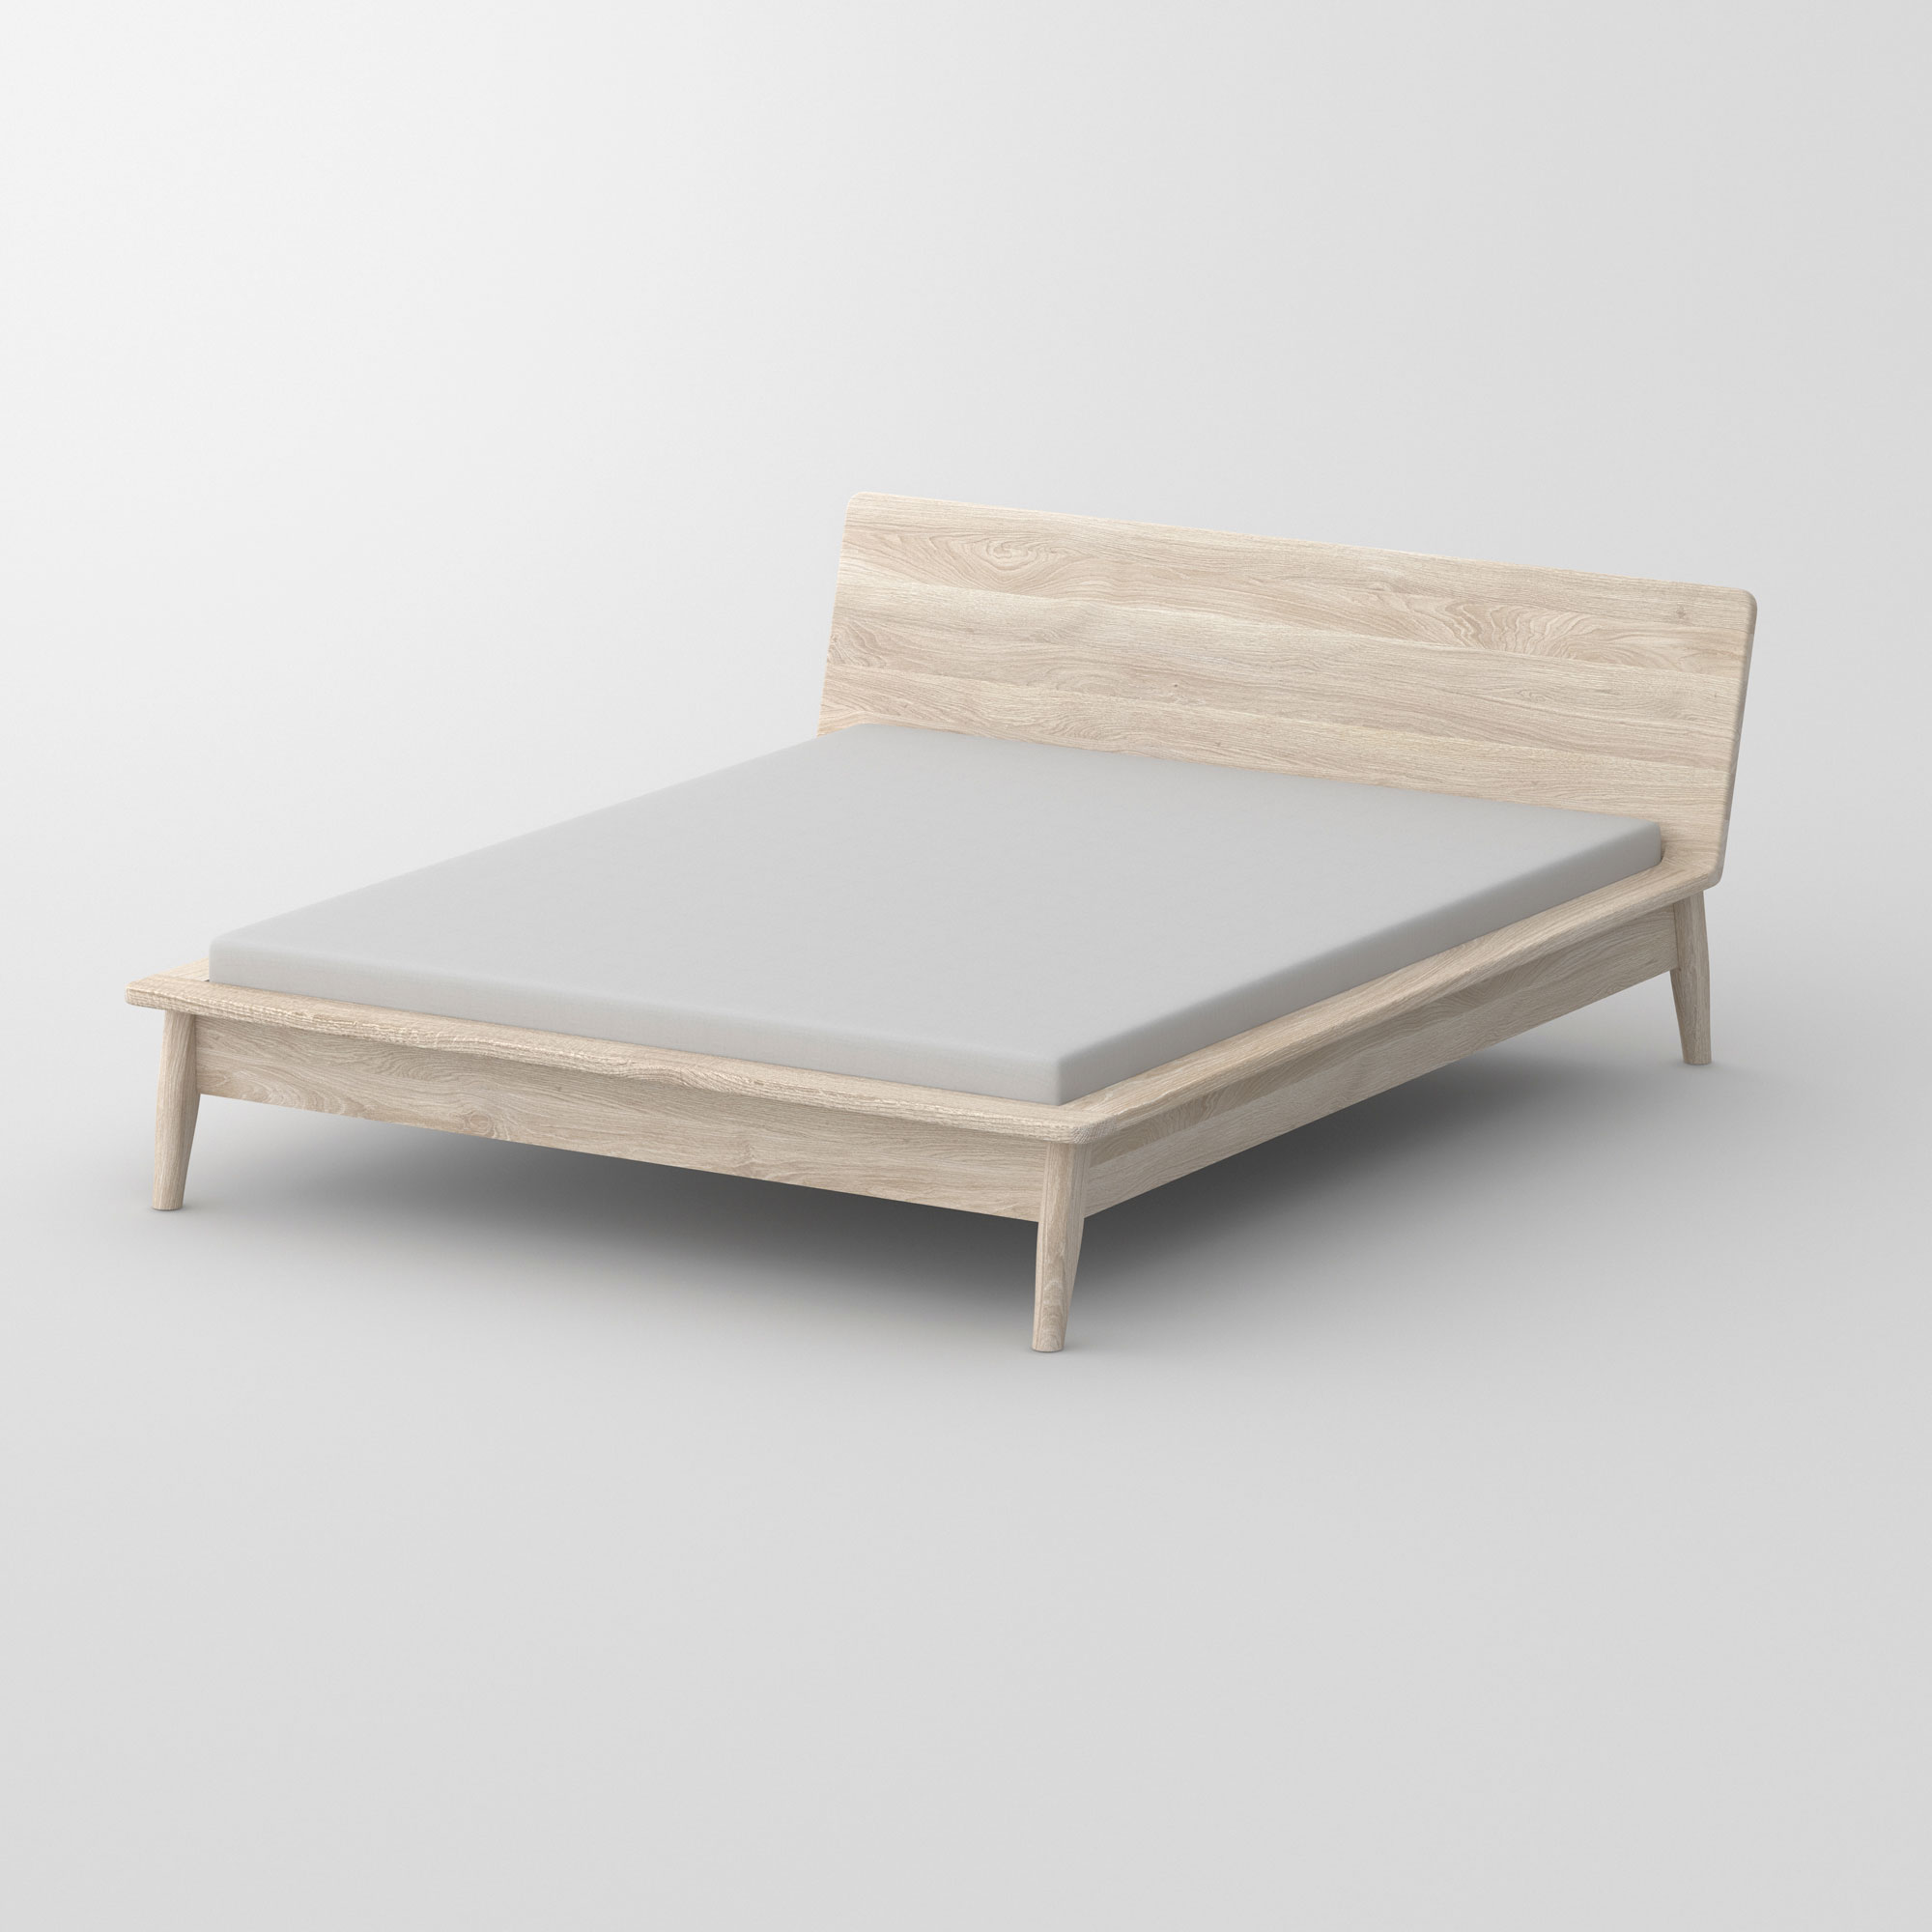 Designer Bed AETAS cam3 custom made in solid wood by vitamin design